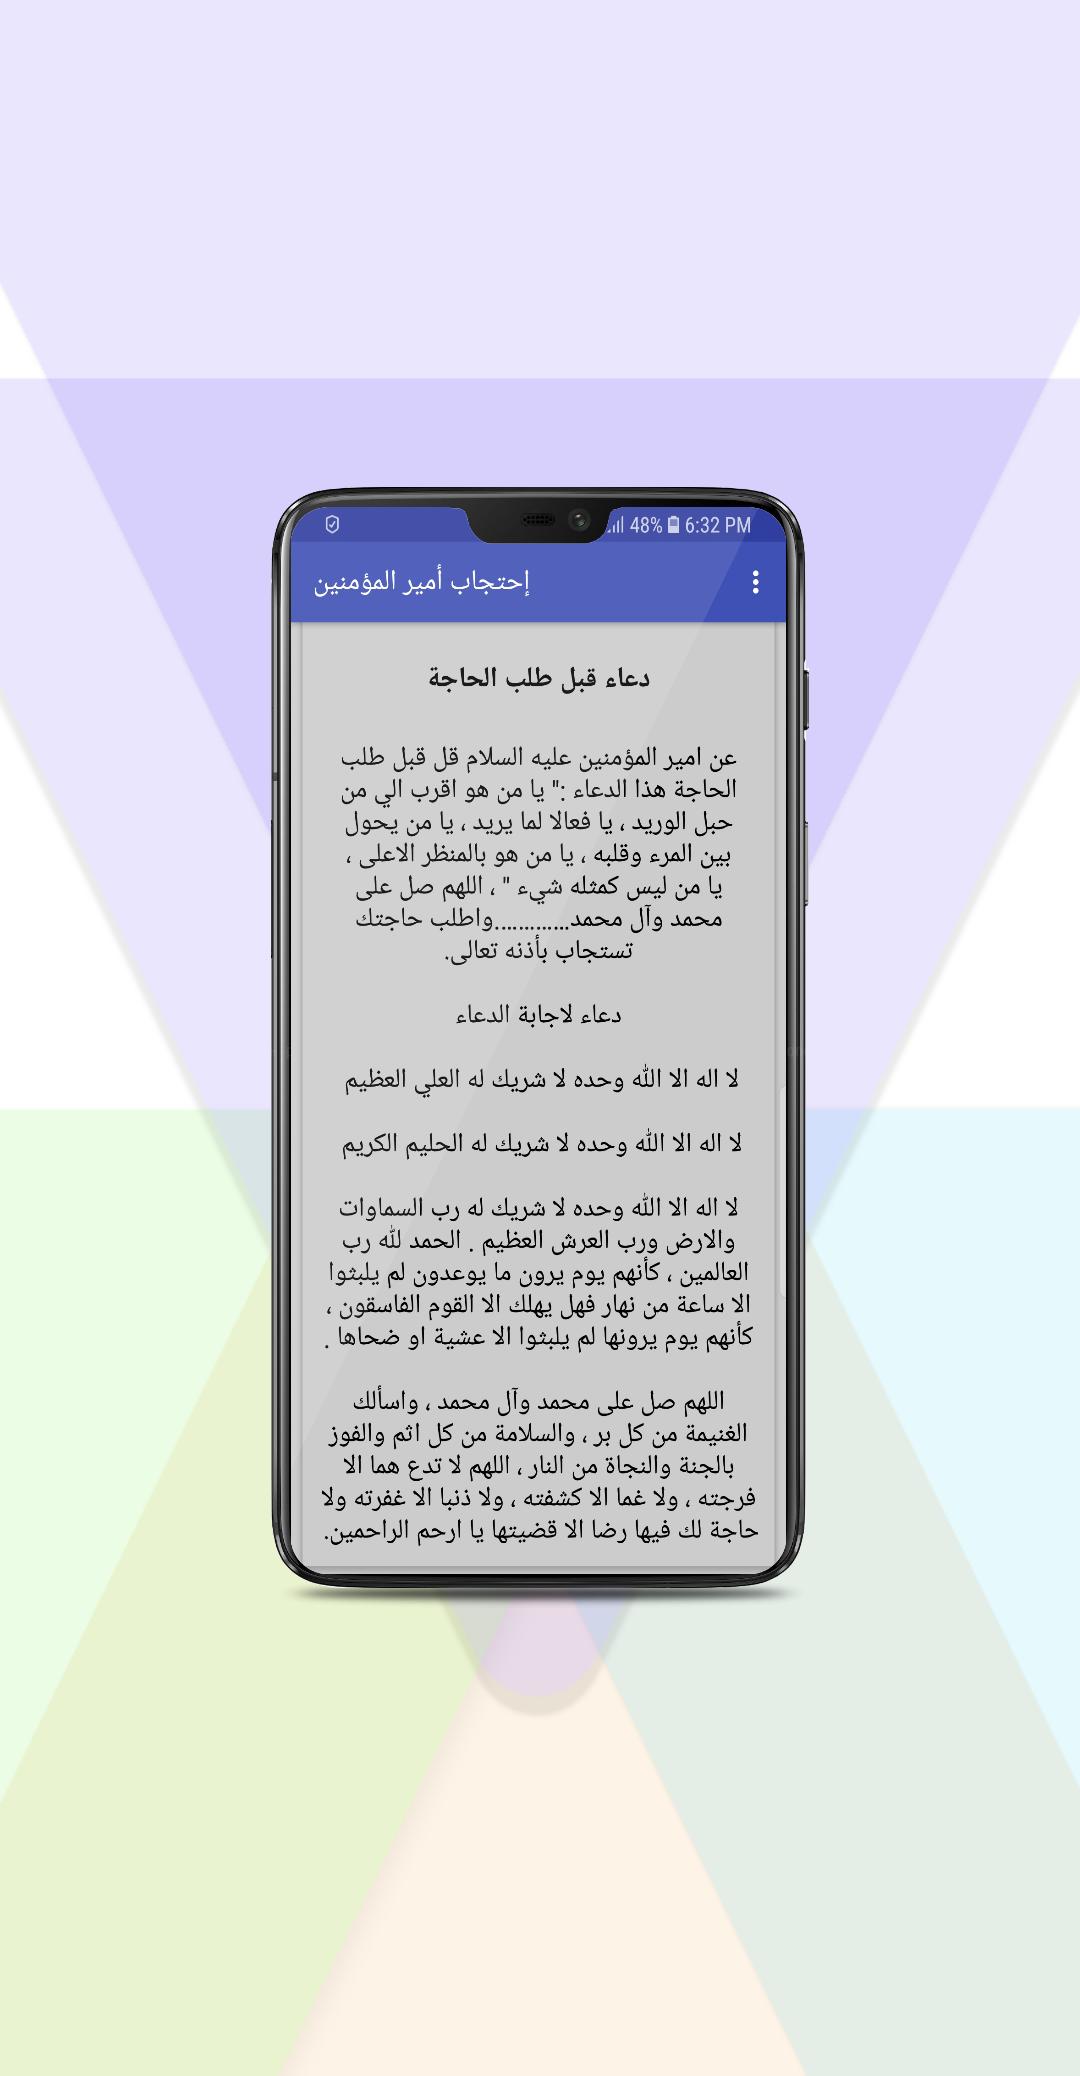 احتجاب أمير المؤمنين - حرز ضد APK for Android Download